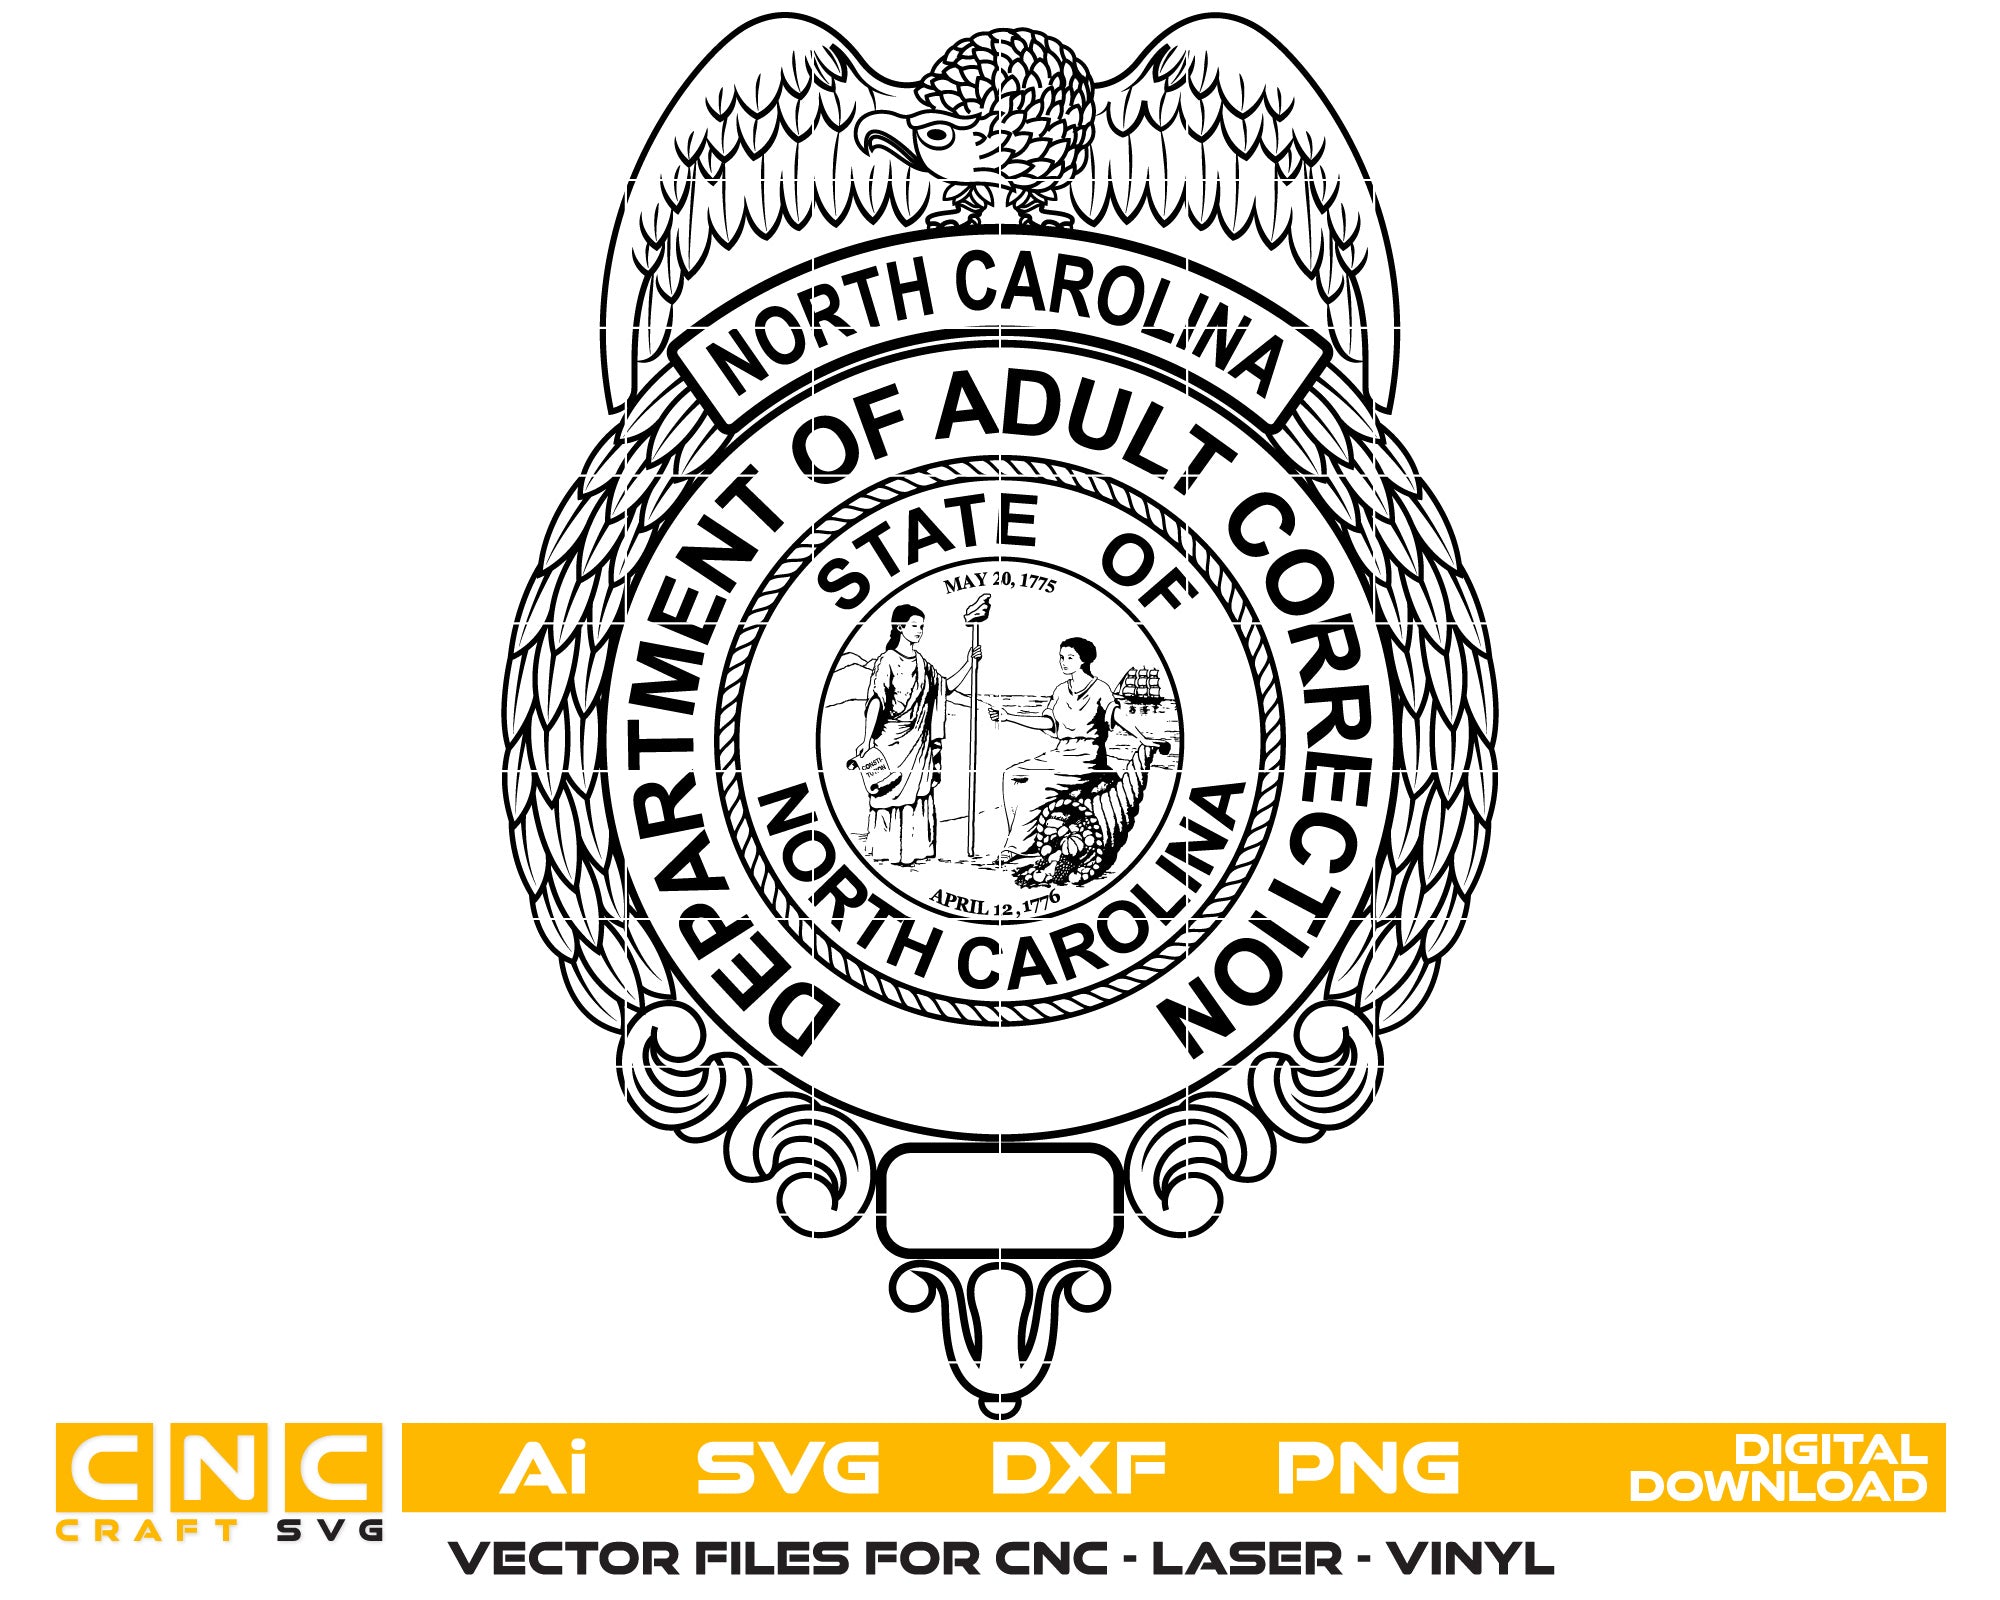 North Carolina Department of Adult Corrections Badge Vector Art, Ai,SVG, DXF, PNG, Digital Files